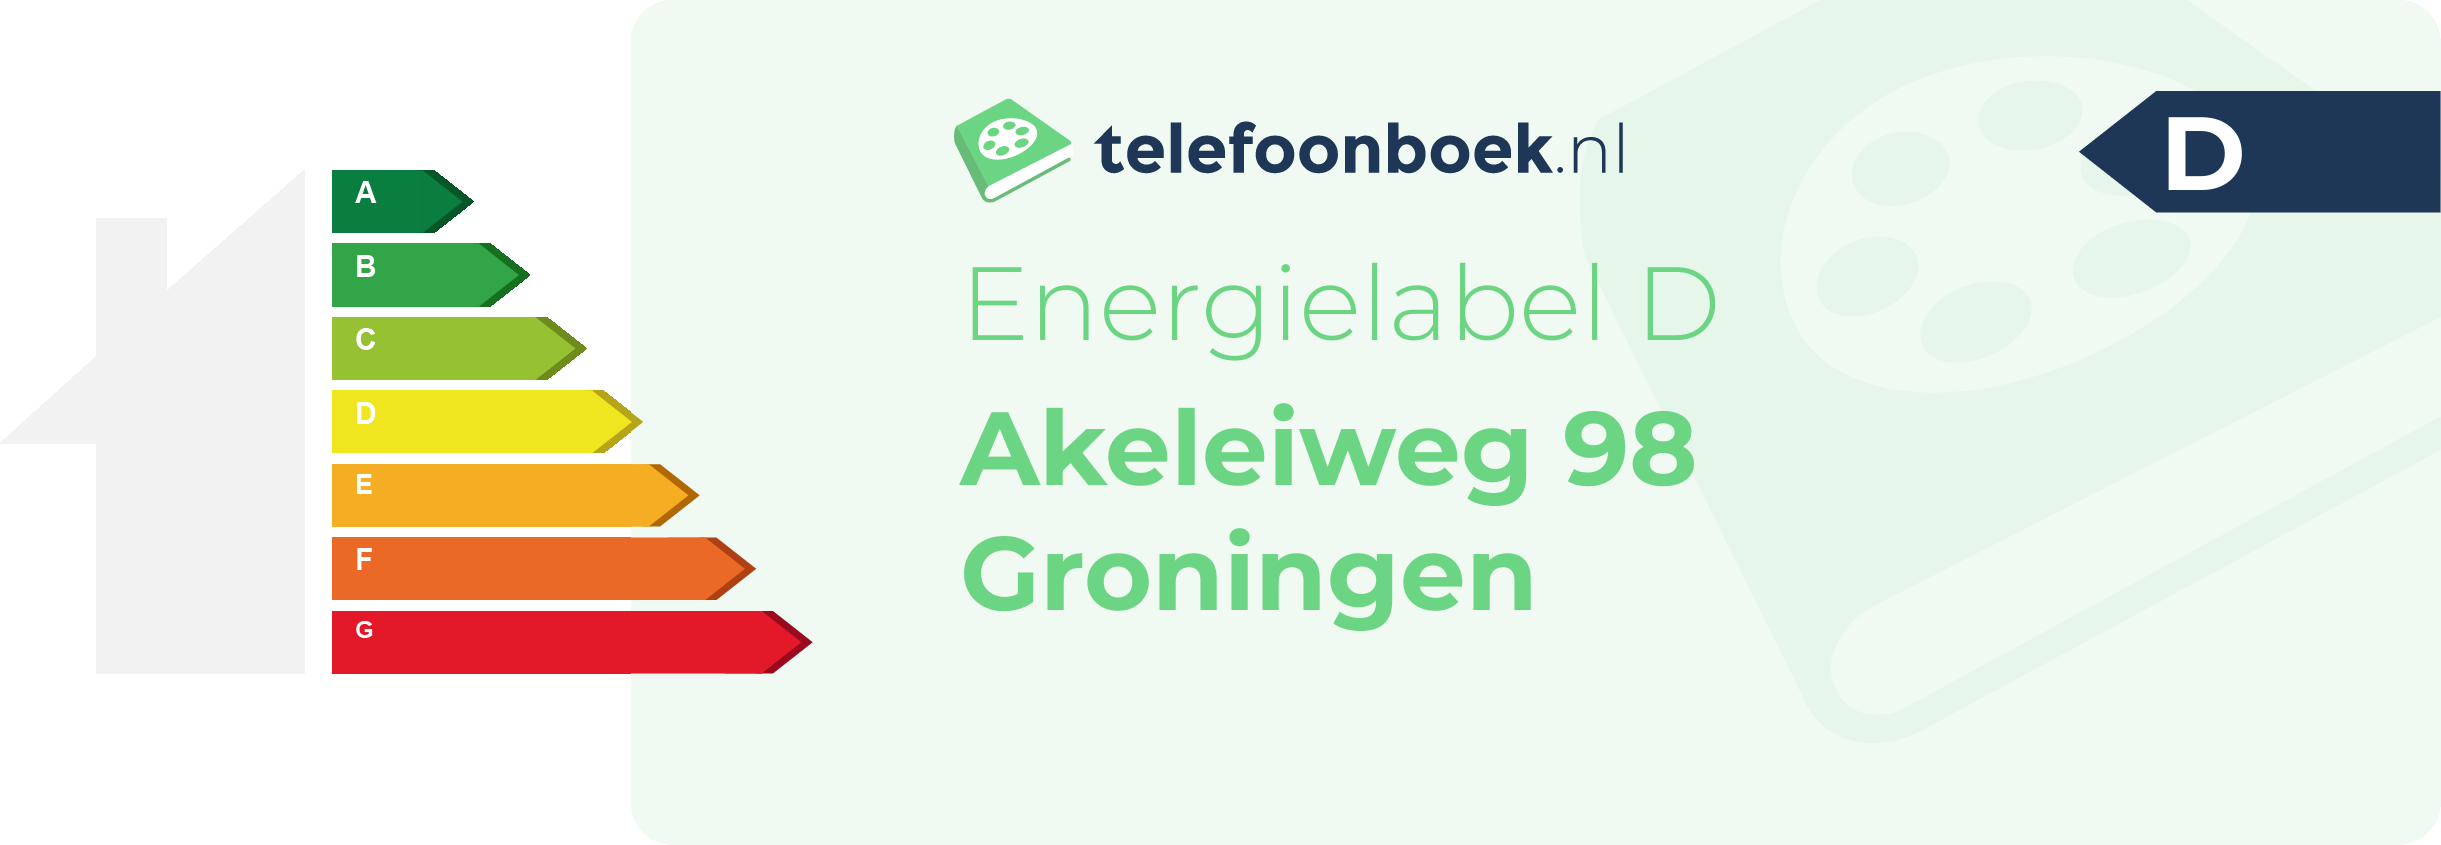 Energielabel Akeleiweg 98 Groningen